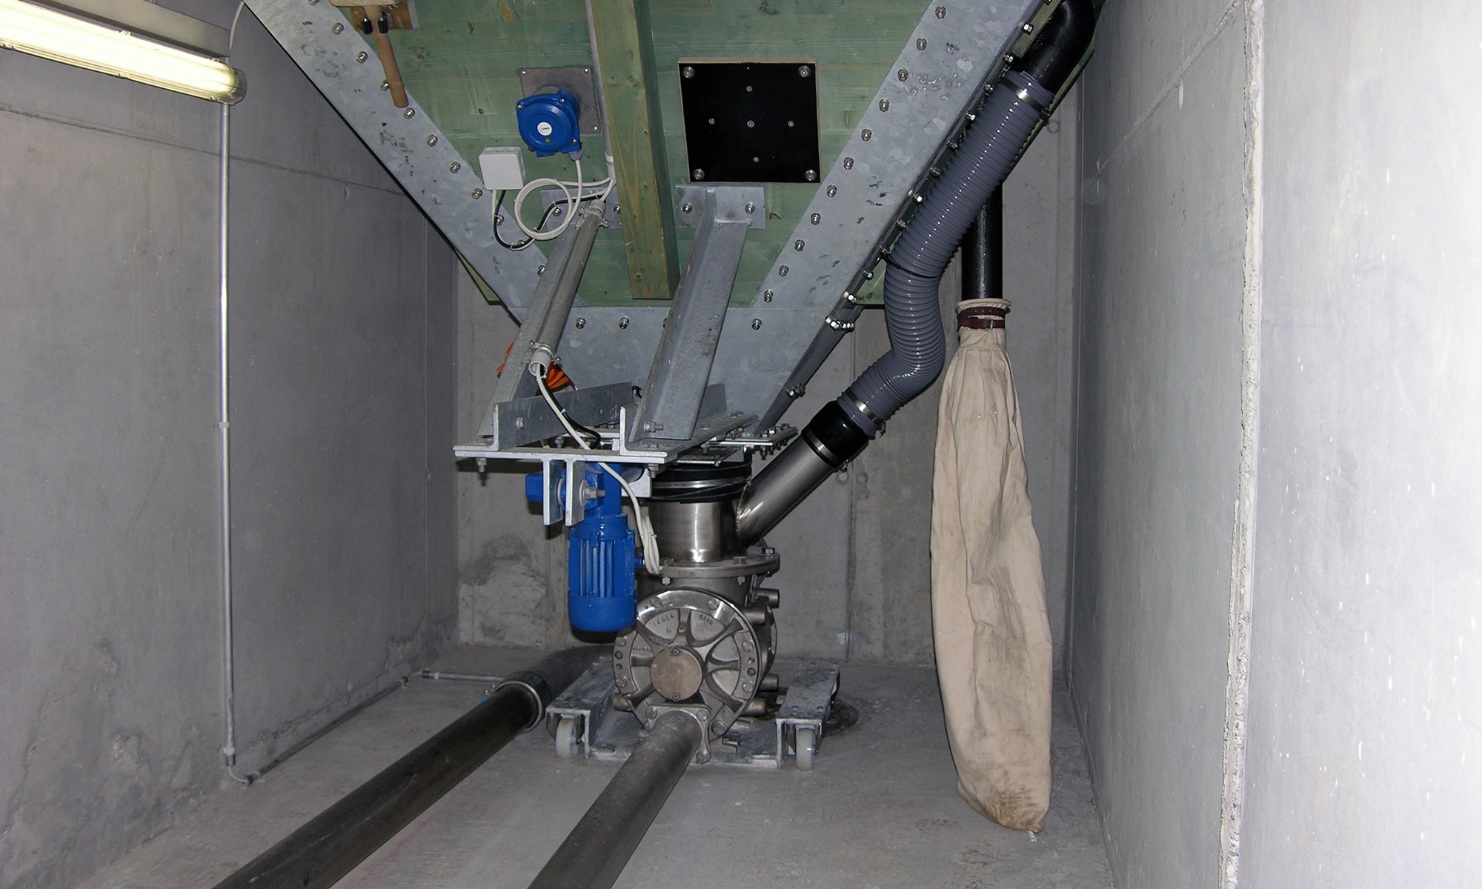 Stationary underfloor conveyor system